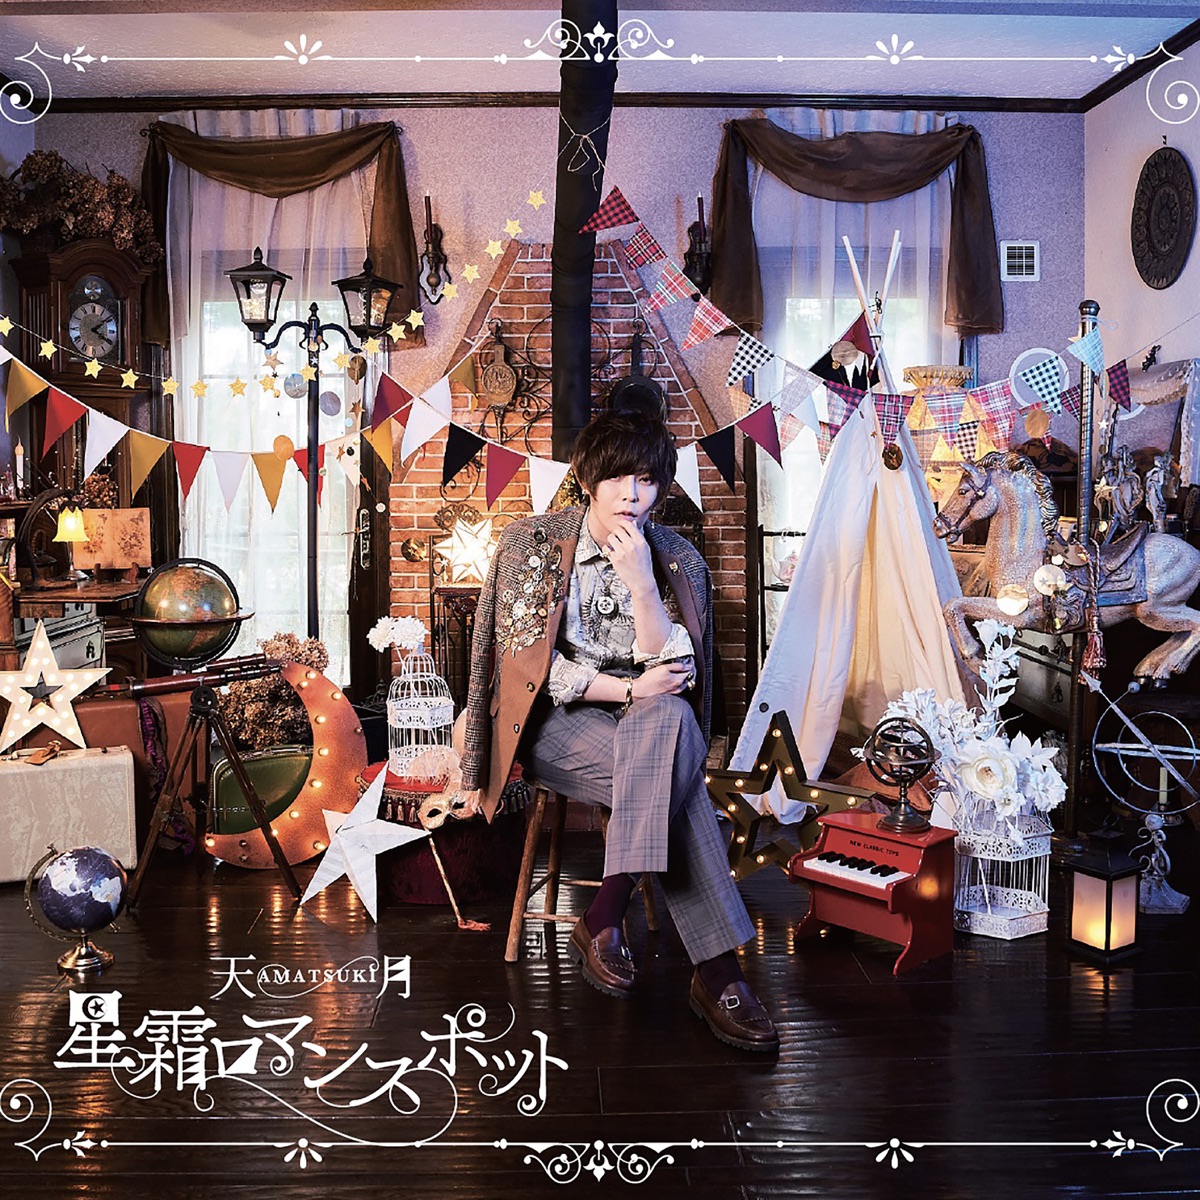 Cover art for『Amatsuki - Hate Speech feat. Mafumafu』from the release『Seisou Roman Spot』